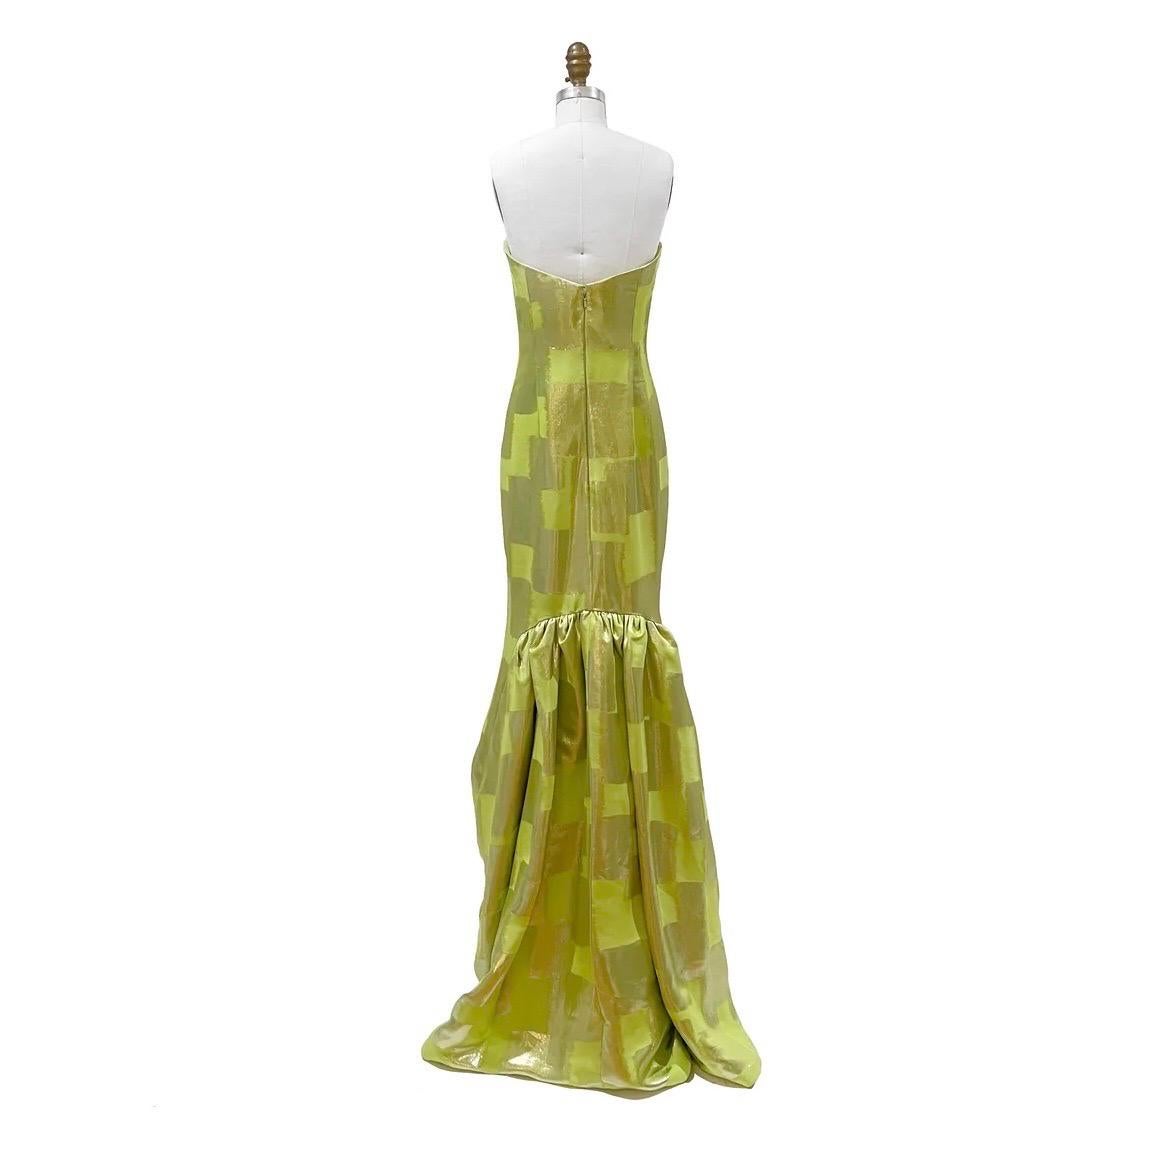 Brown Oscar de la Renta Green Strapless Gown (Circa 2010 -) For Sale